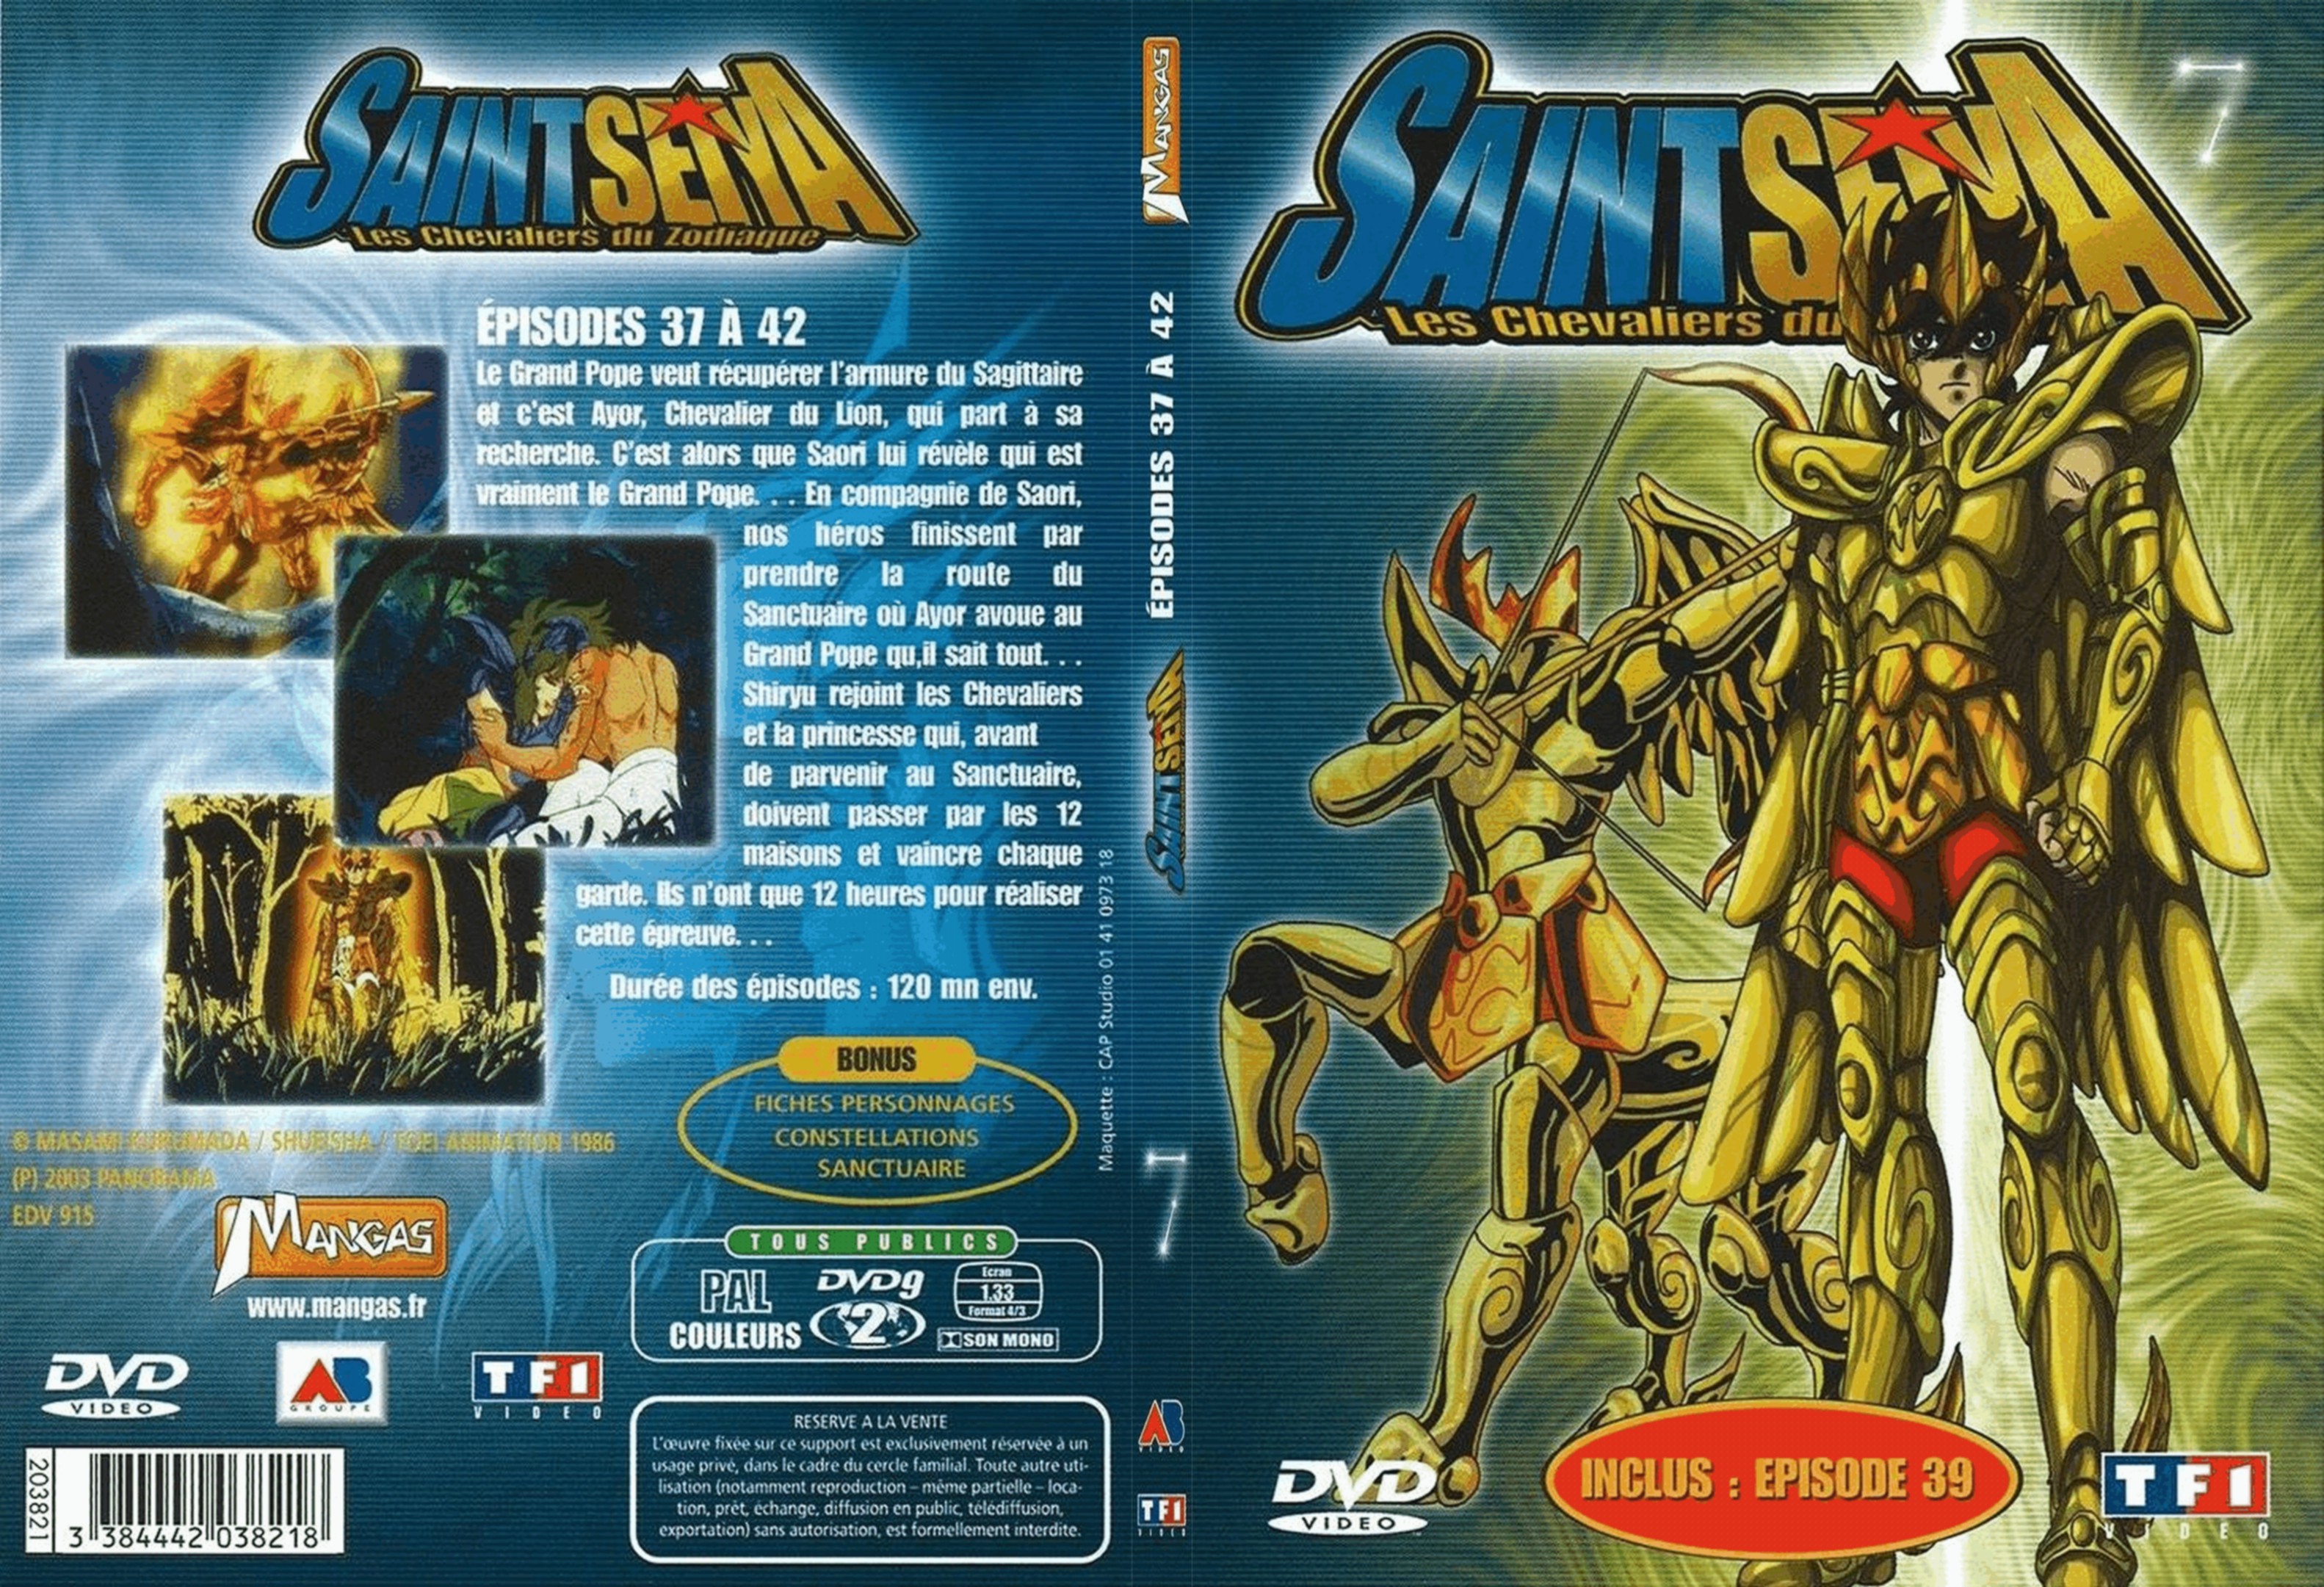 Jaquette DVD Saint Seiya vol 07 - SLIM